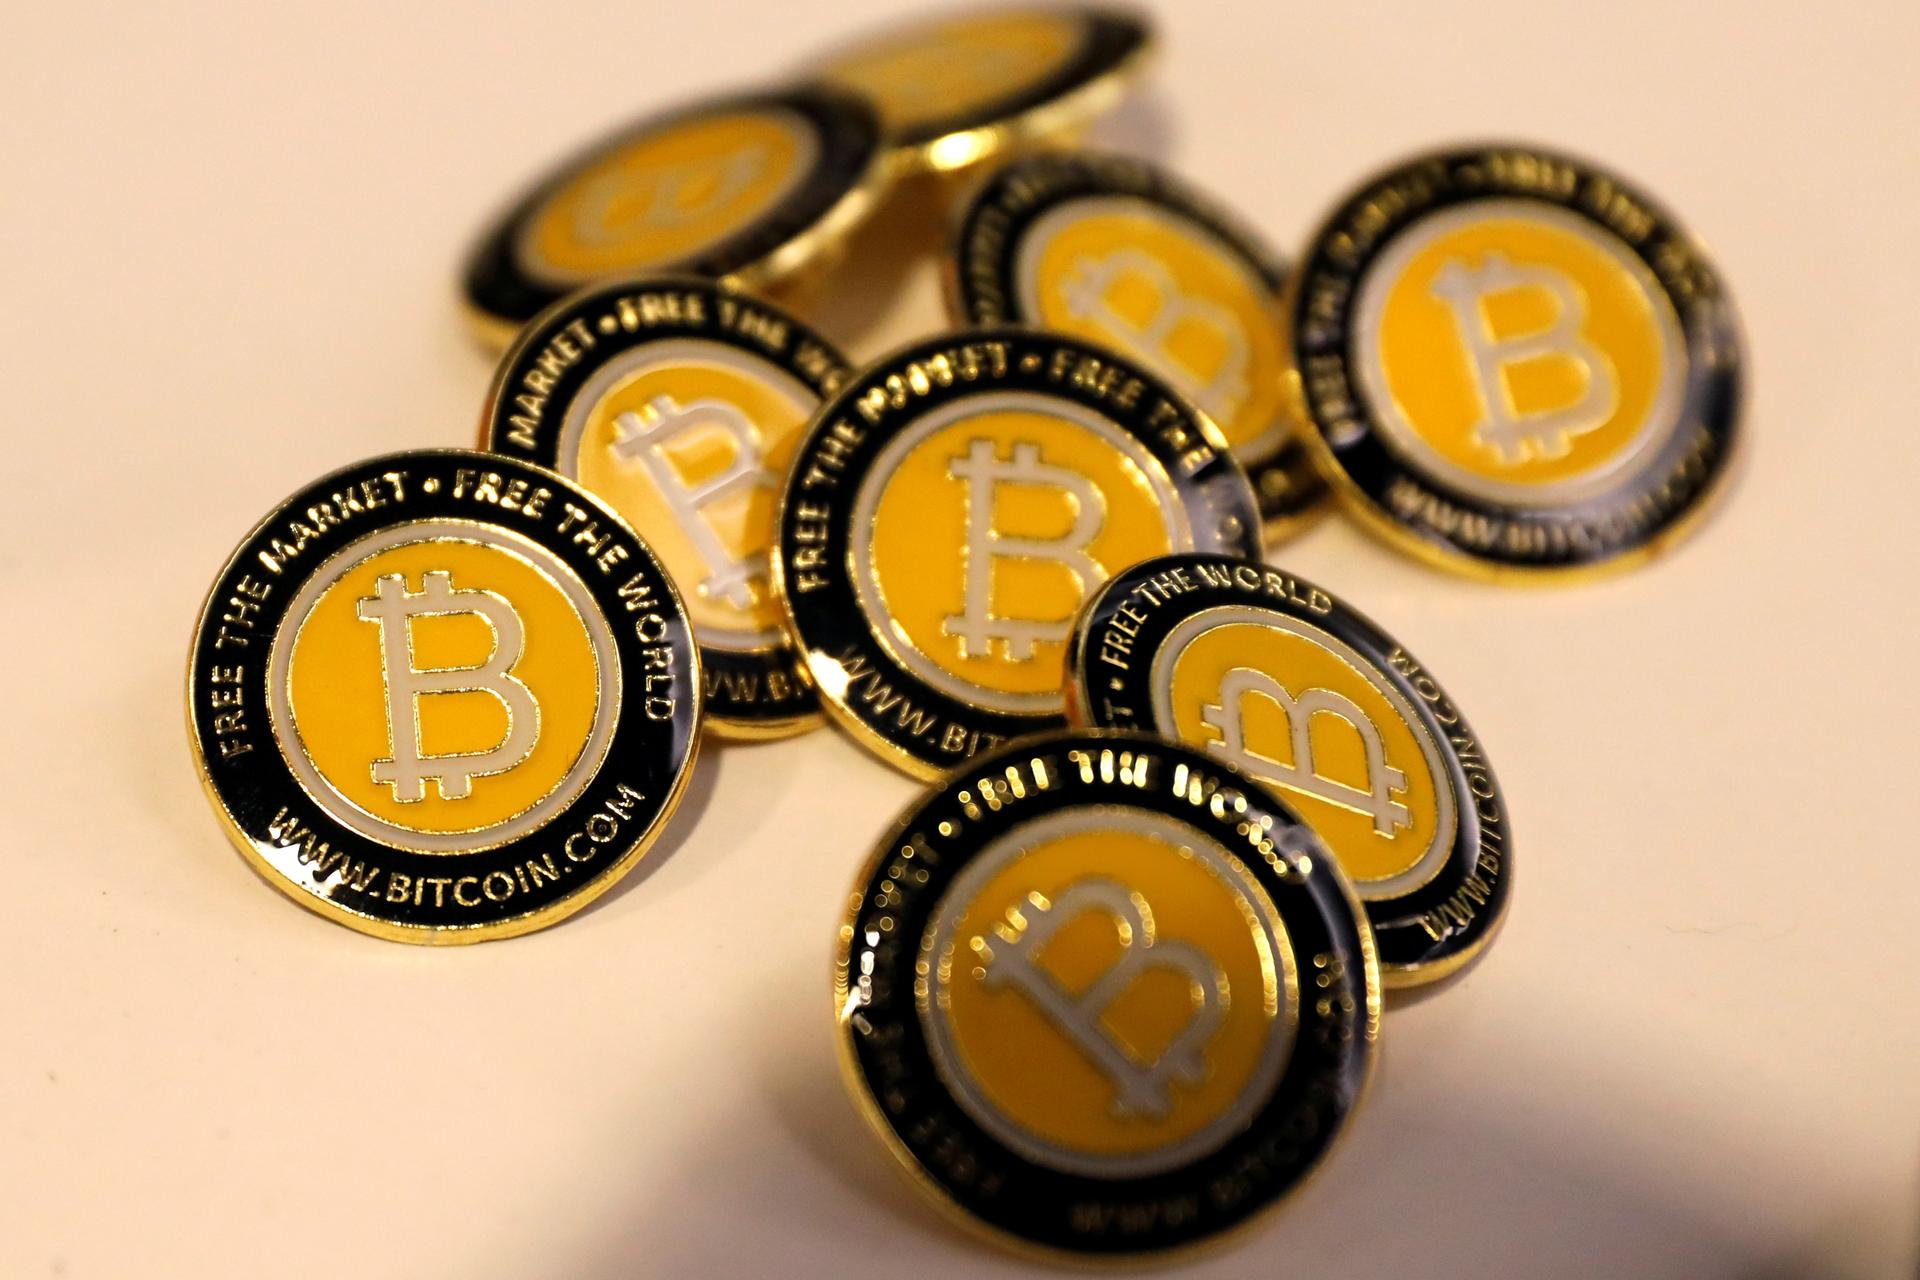 about a dozen bitcoin buttons in a pile